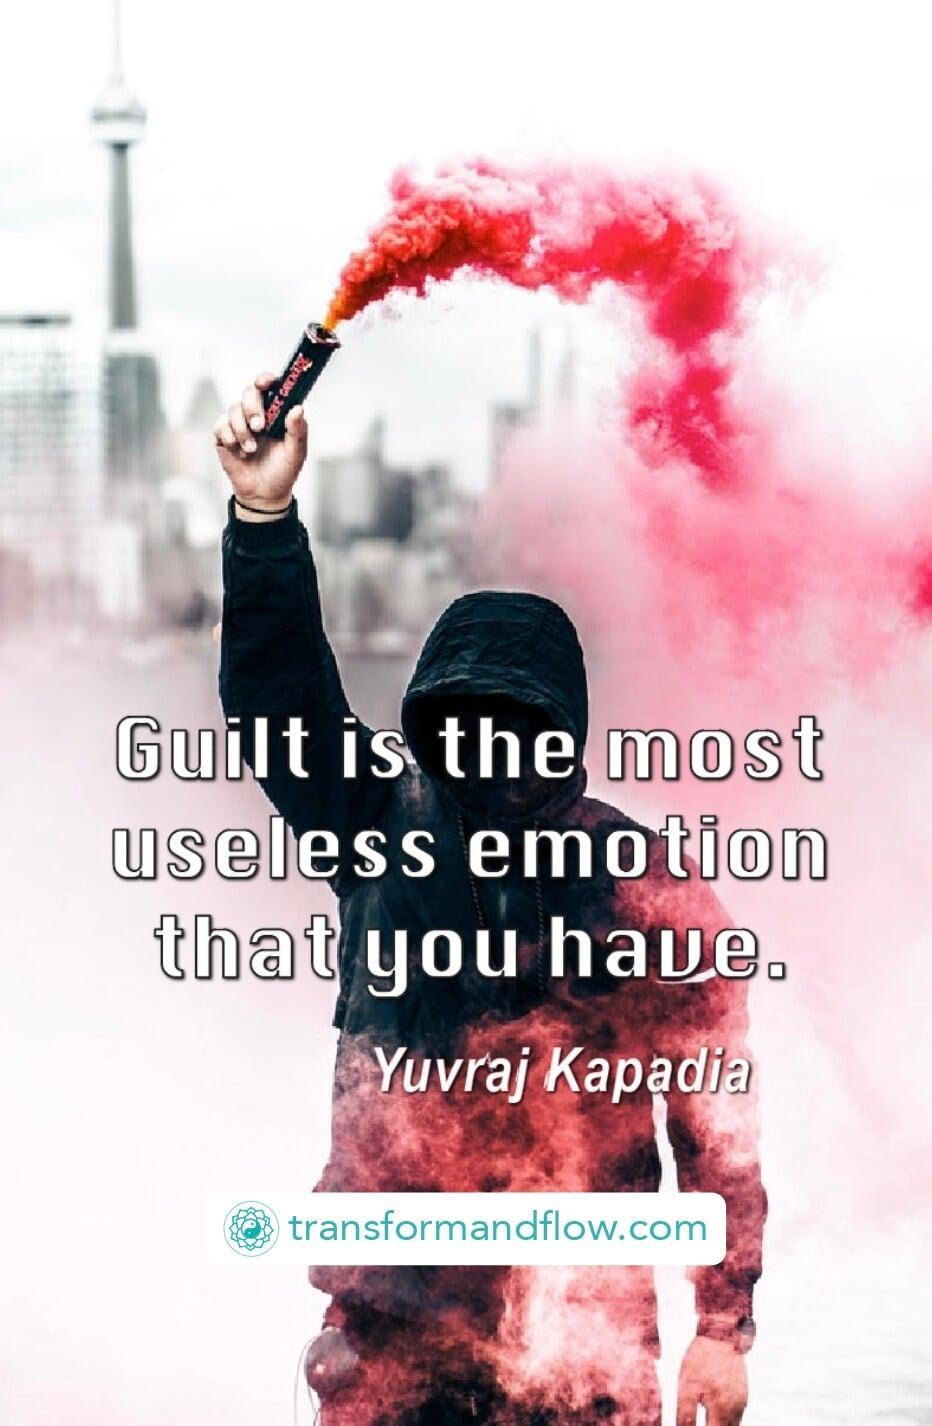 Guilt: A Useless Emotion